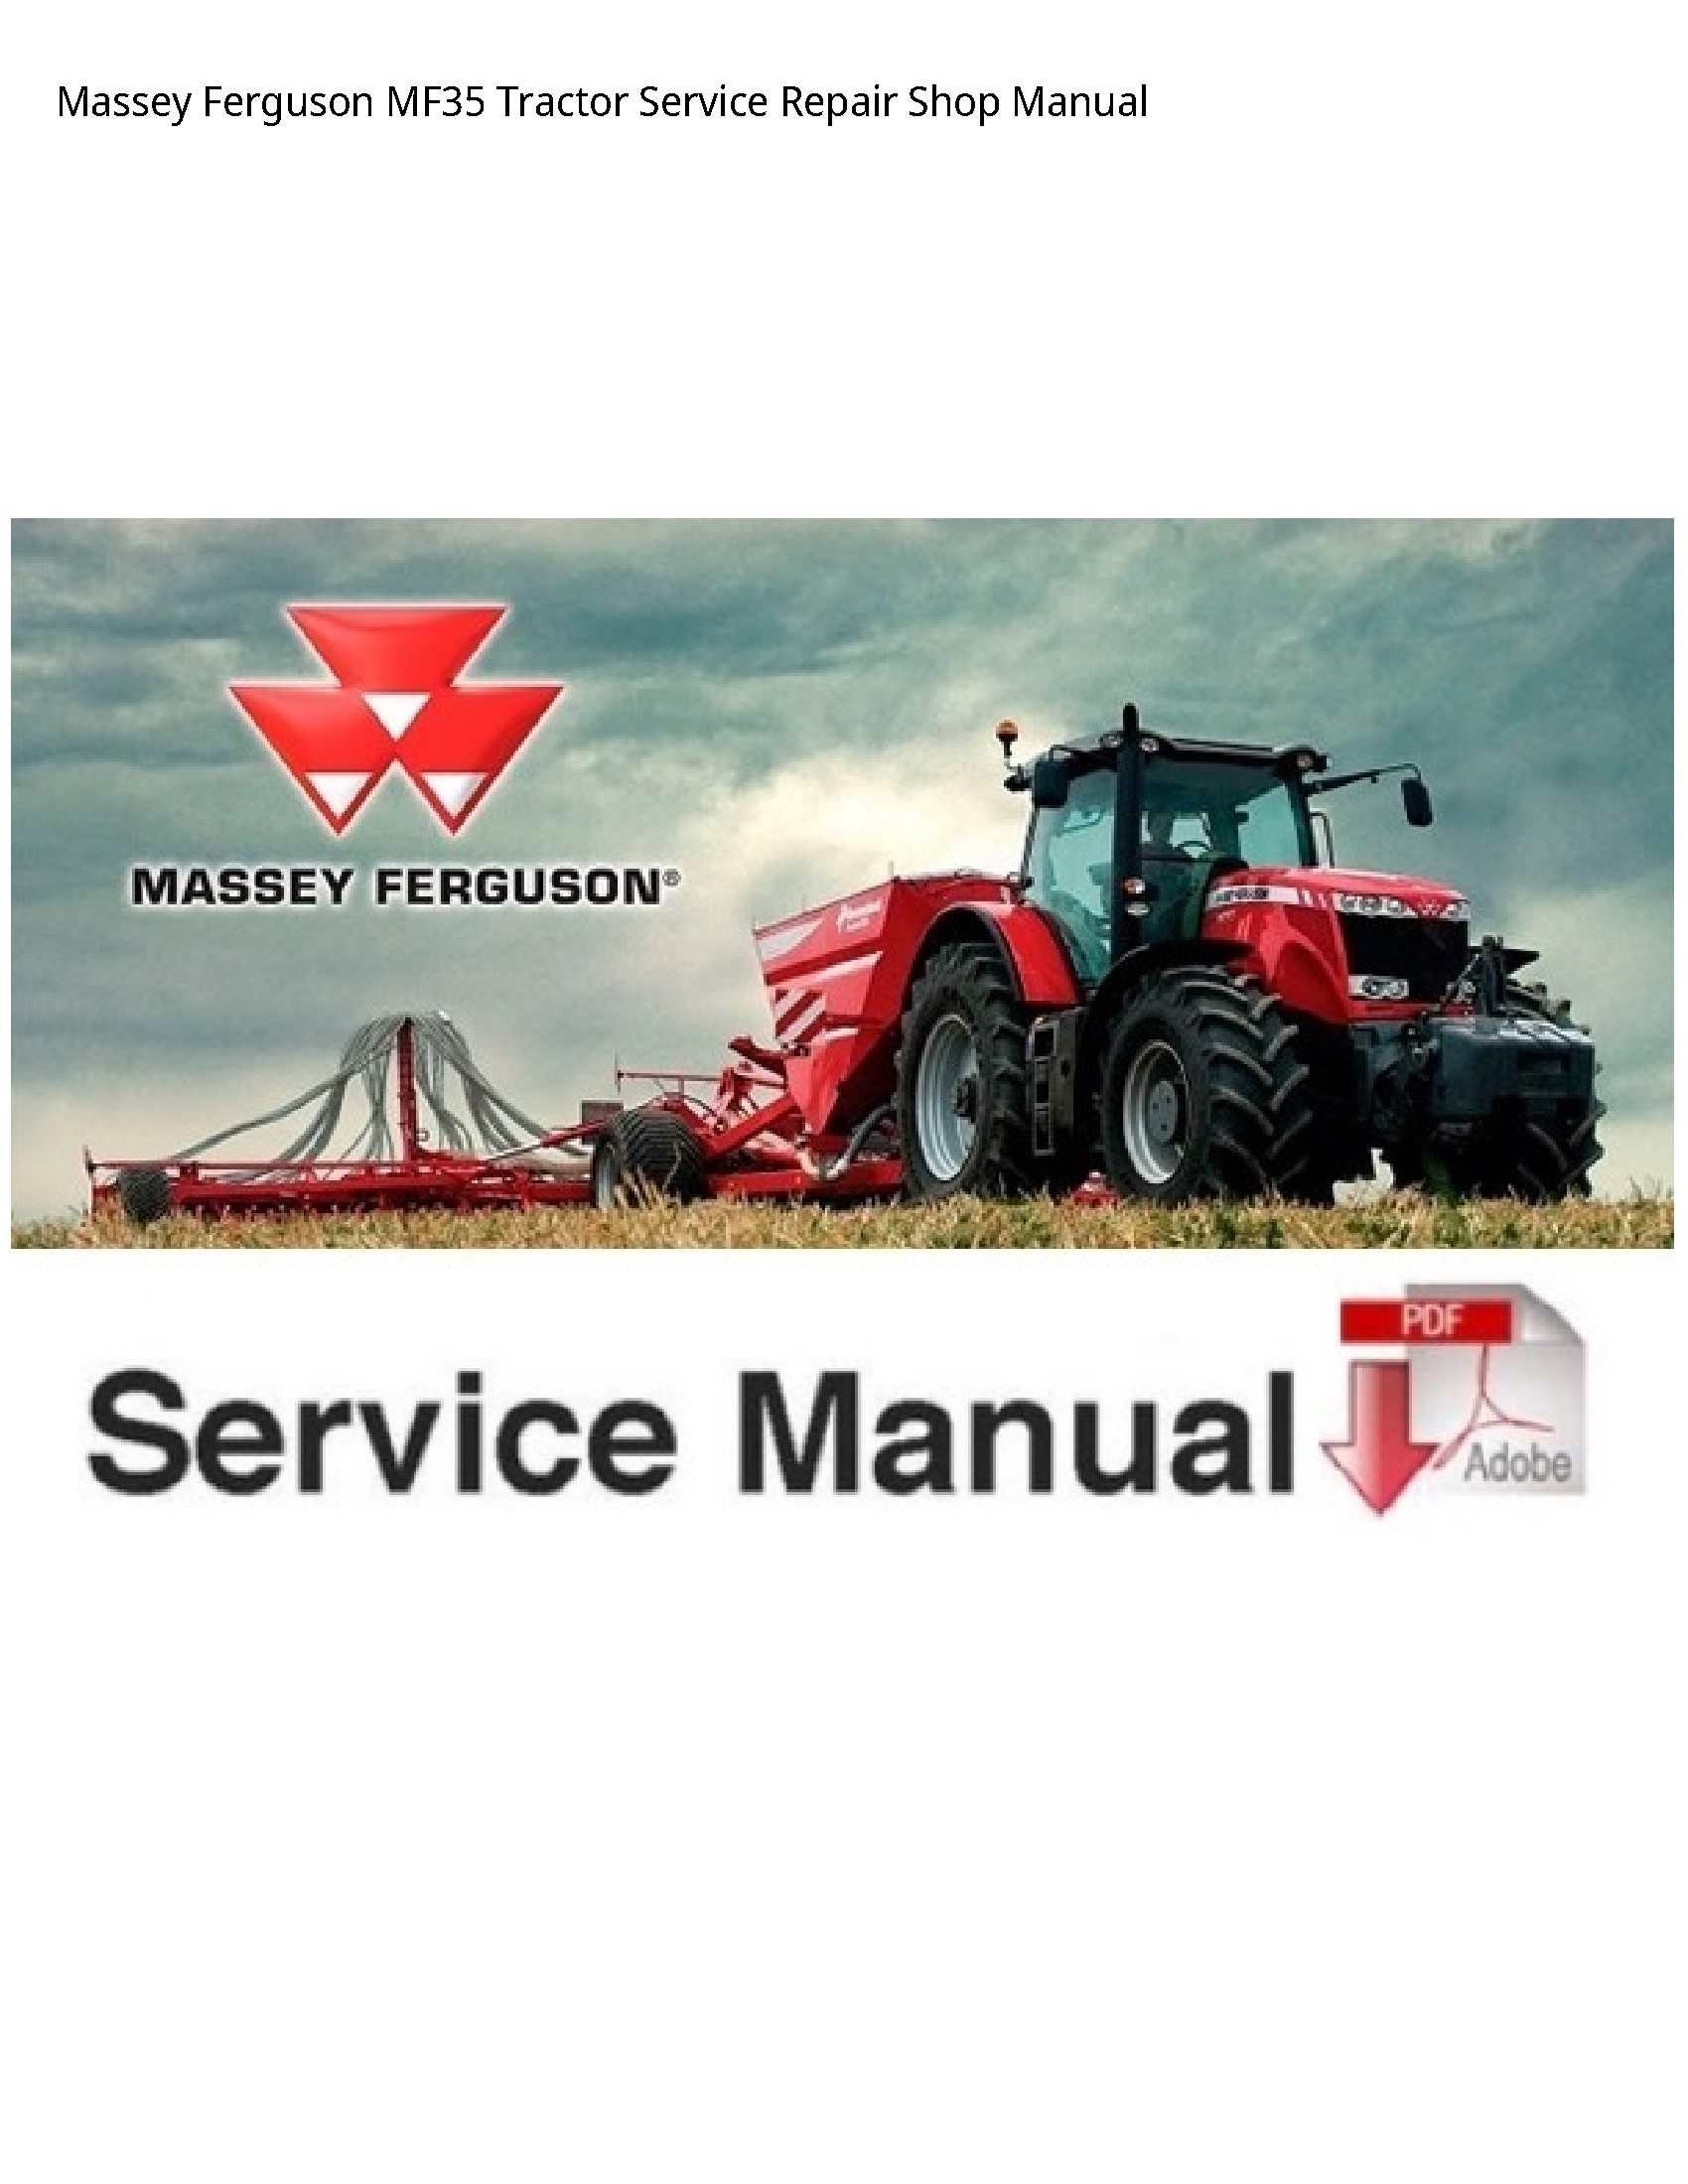 Massey Ferguson MF35 Tractor manual